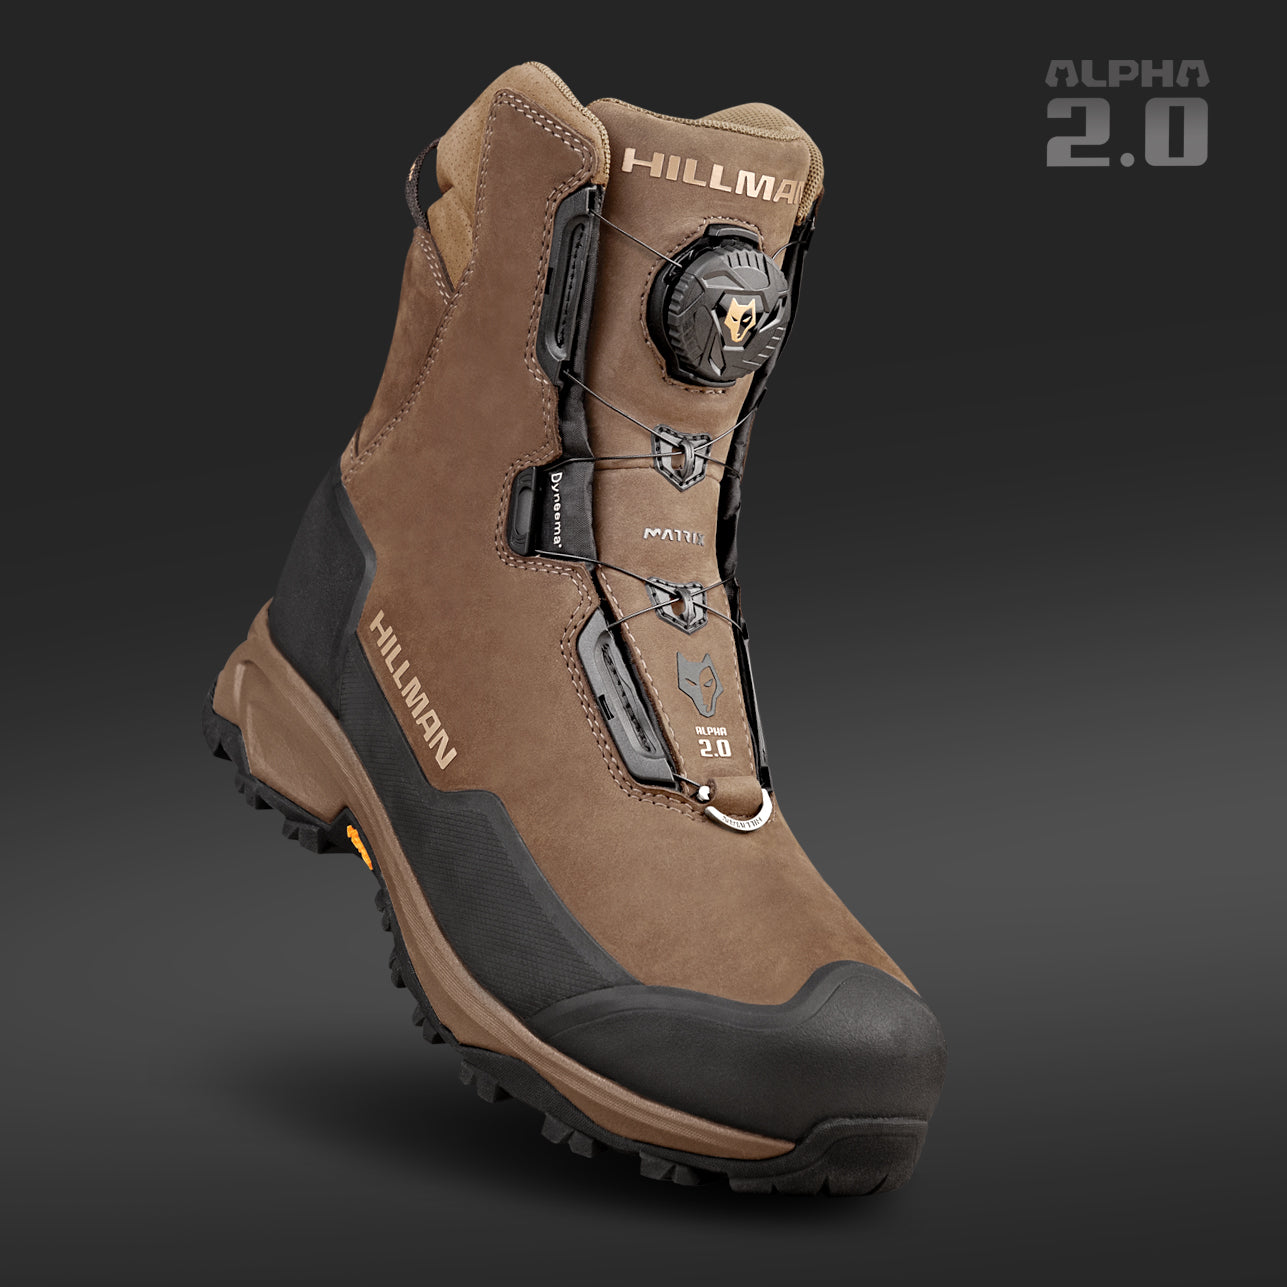 Waterproof Hunting Boots Hillman Alpha